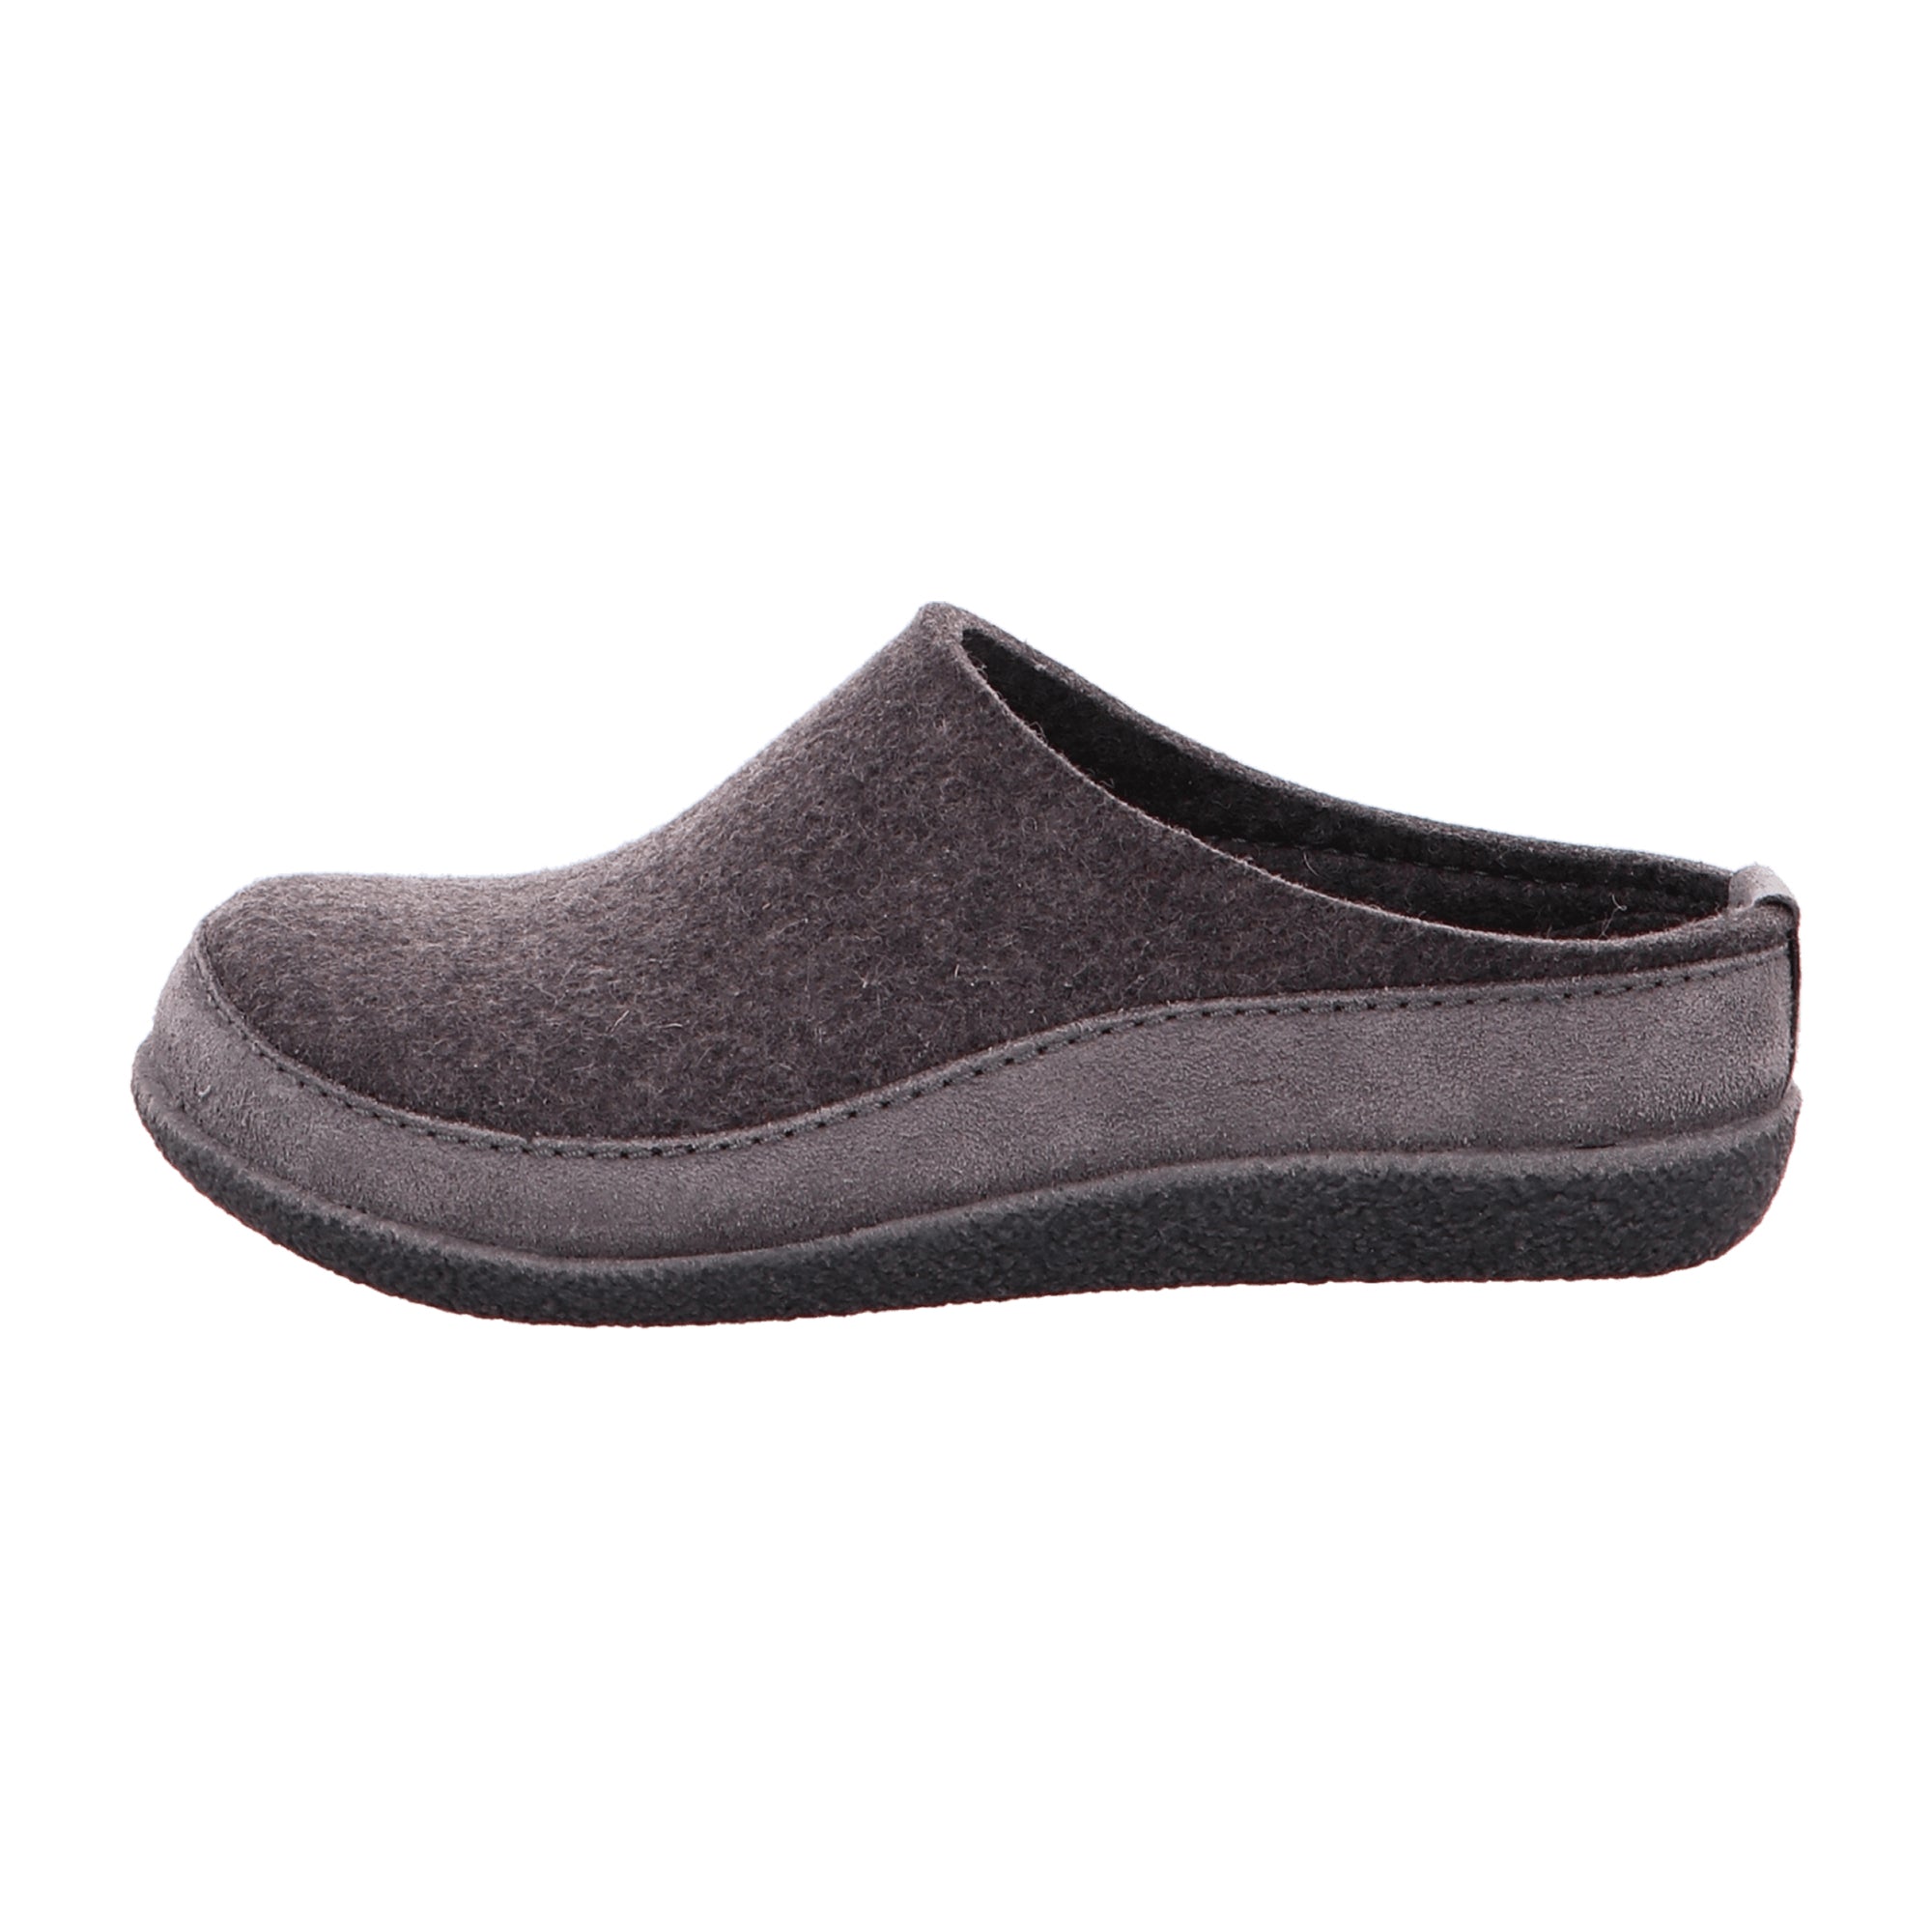 Haflinger Blizzard Graphite Men's Slippers, Grey - Comfortable & Durable